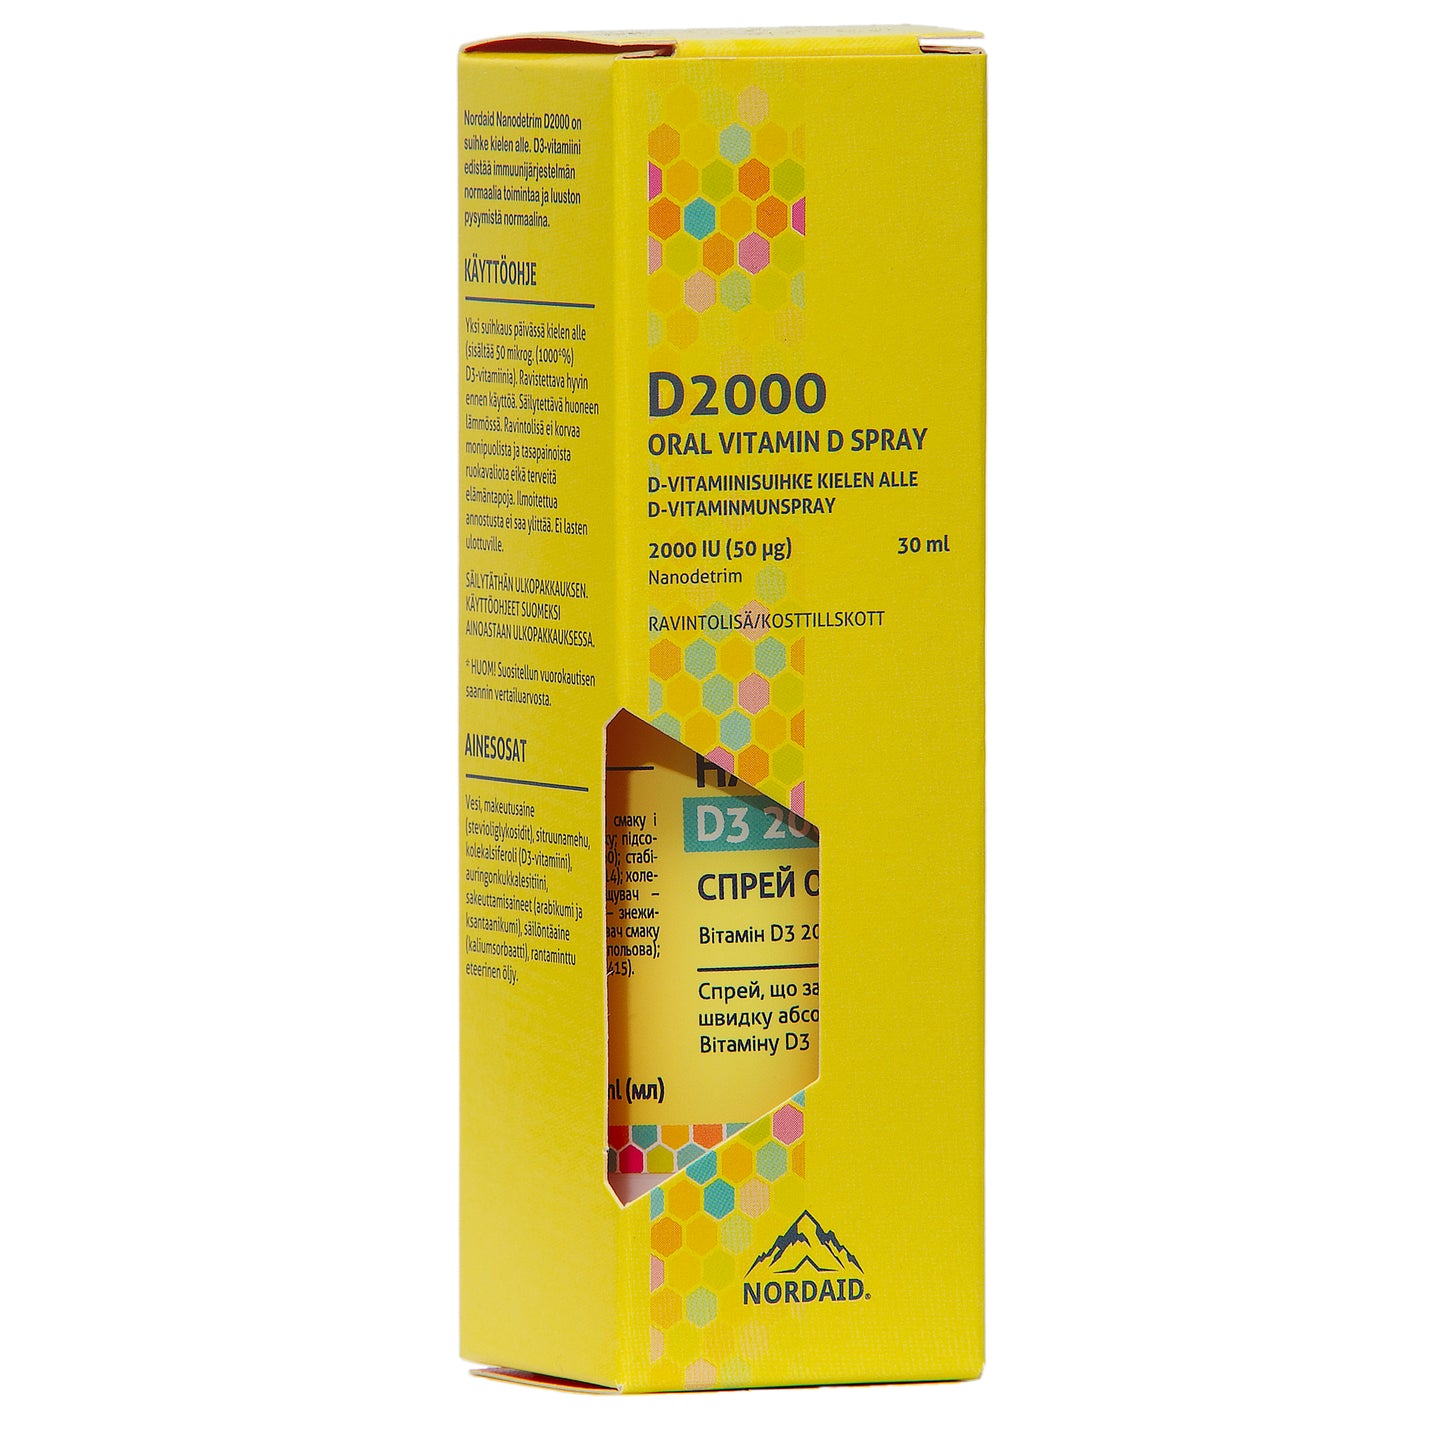 Nordaid D2000 Vitamin D Spray